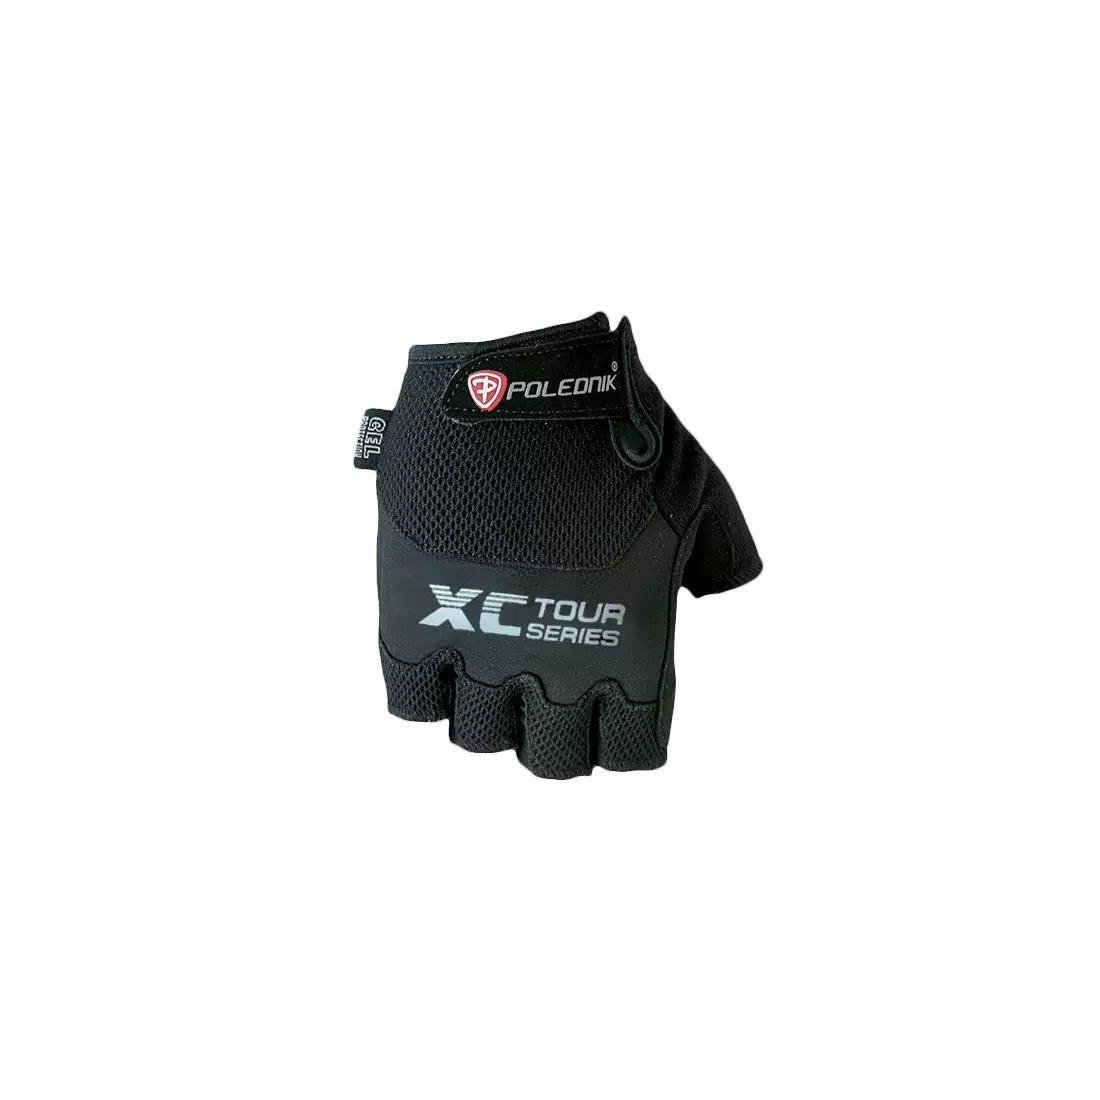 POLEDNIK MARATHON XC gloves